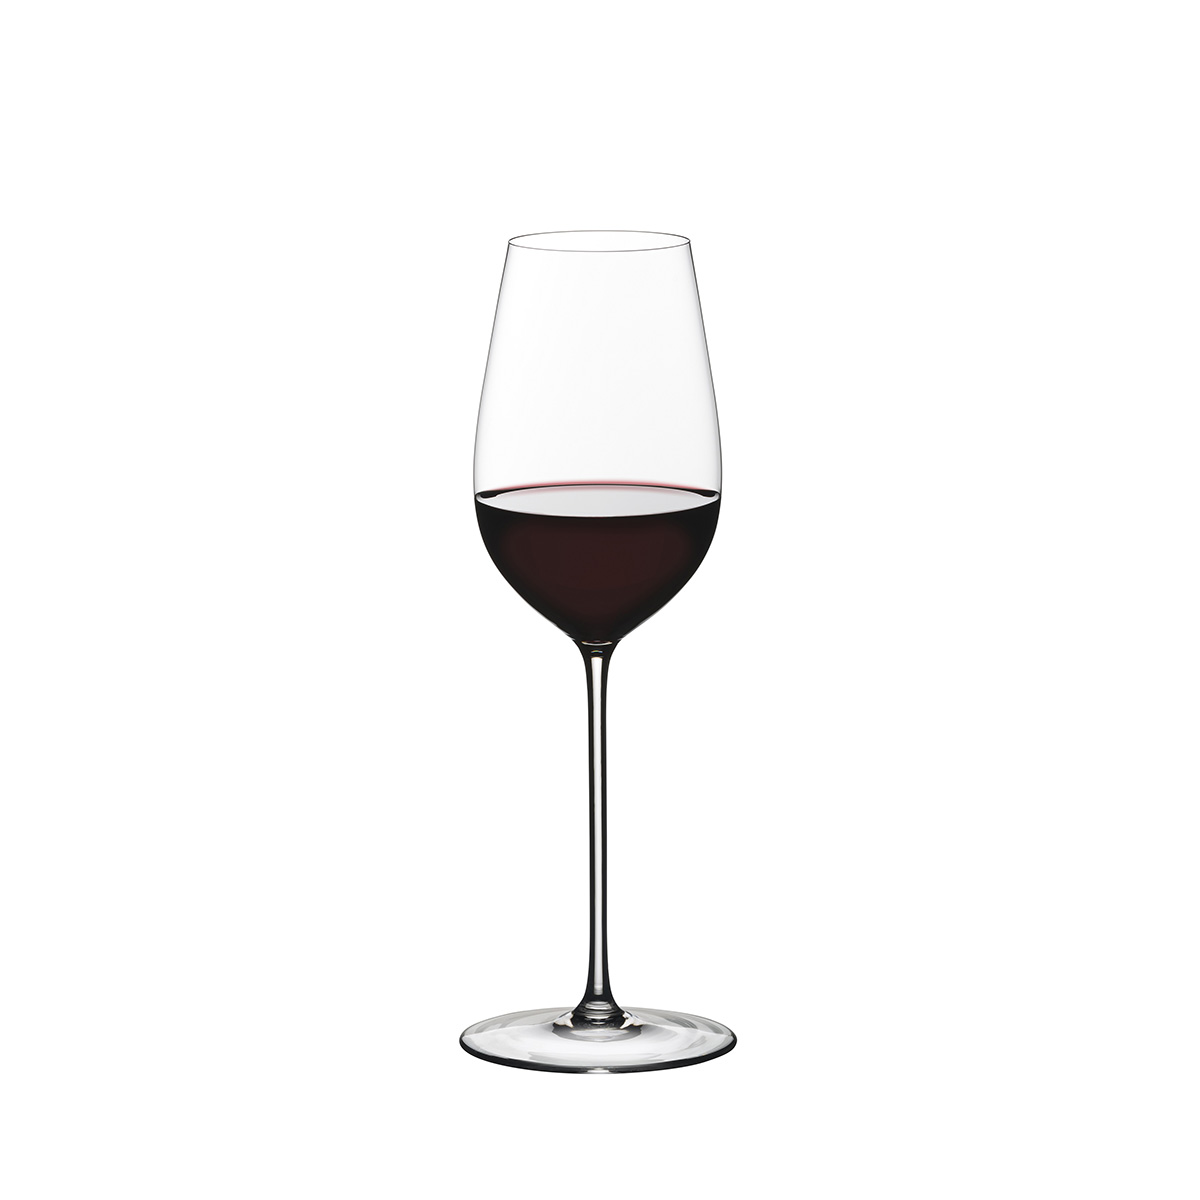 RIEDEL リーデル・ スーパーレジェーロ ・リースリング／ジンファンデル・ ワイン・グラス 4425/15 Riedel Superleggero Riesling/Zinfandel Wine Glass